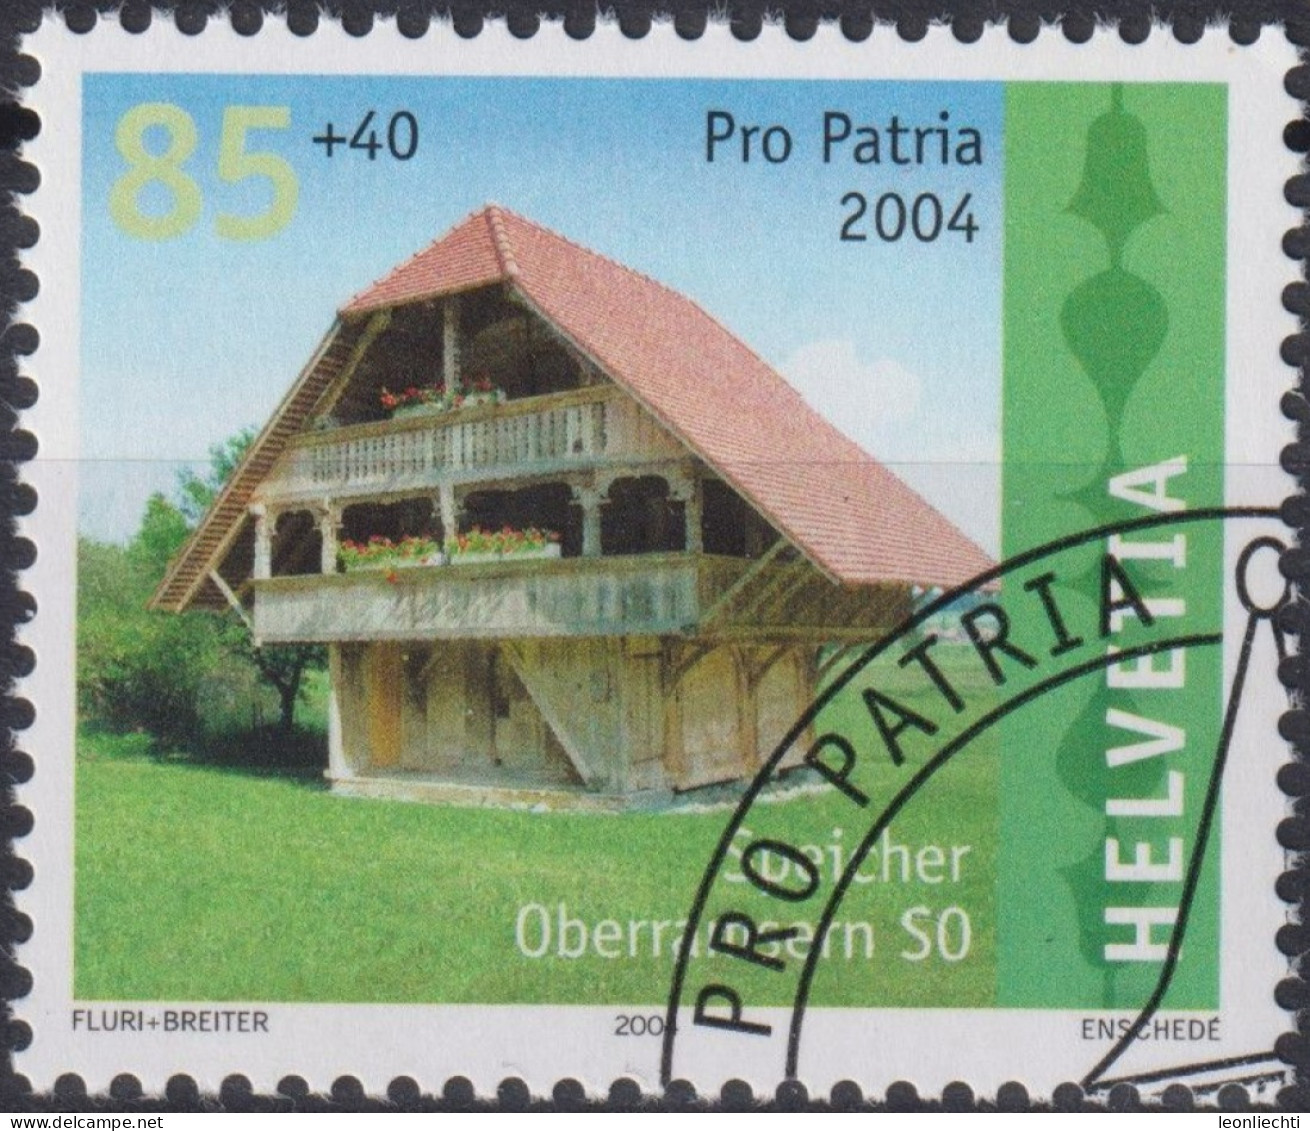 2004 Schweiz Pro Patria, Speicher, Oberramsern SO ⵙ Zum:CH B285, Mi:CH 1875, Yt:CH 1805 - Used Stamps